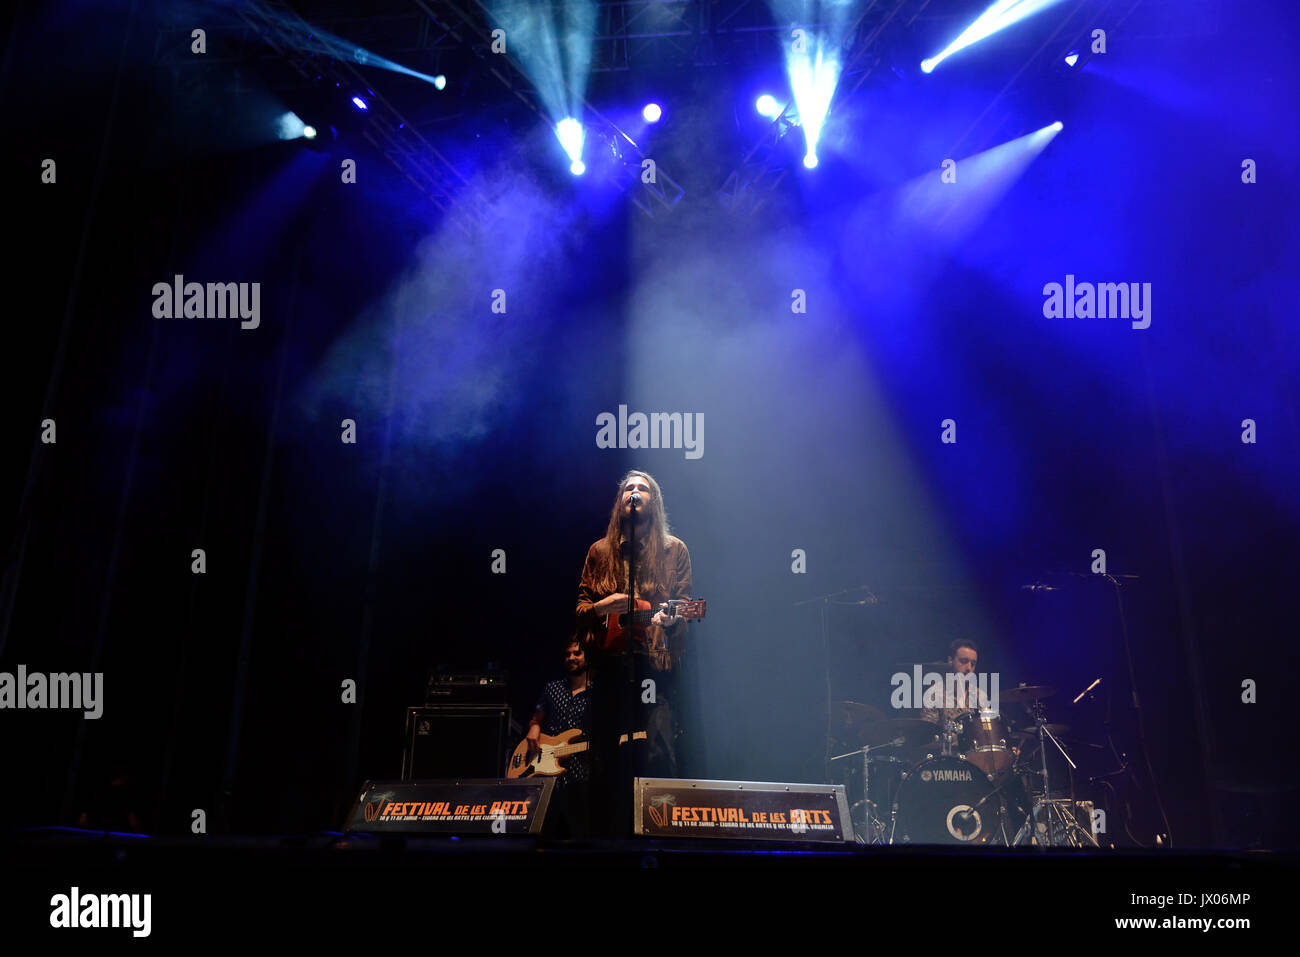 VALENCIA, SPAIN - JUN 10: Carlos Sadness (band) perform in concert at Festival de les Arts on June 10, 2016 in Valencia, Spain. Stock Photo